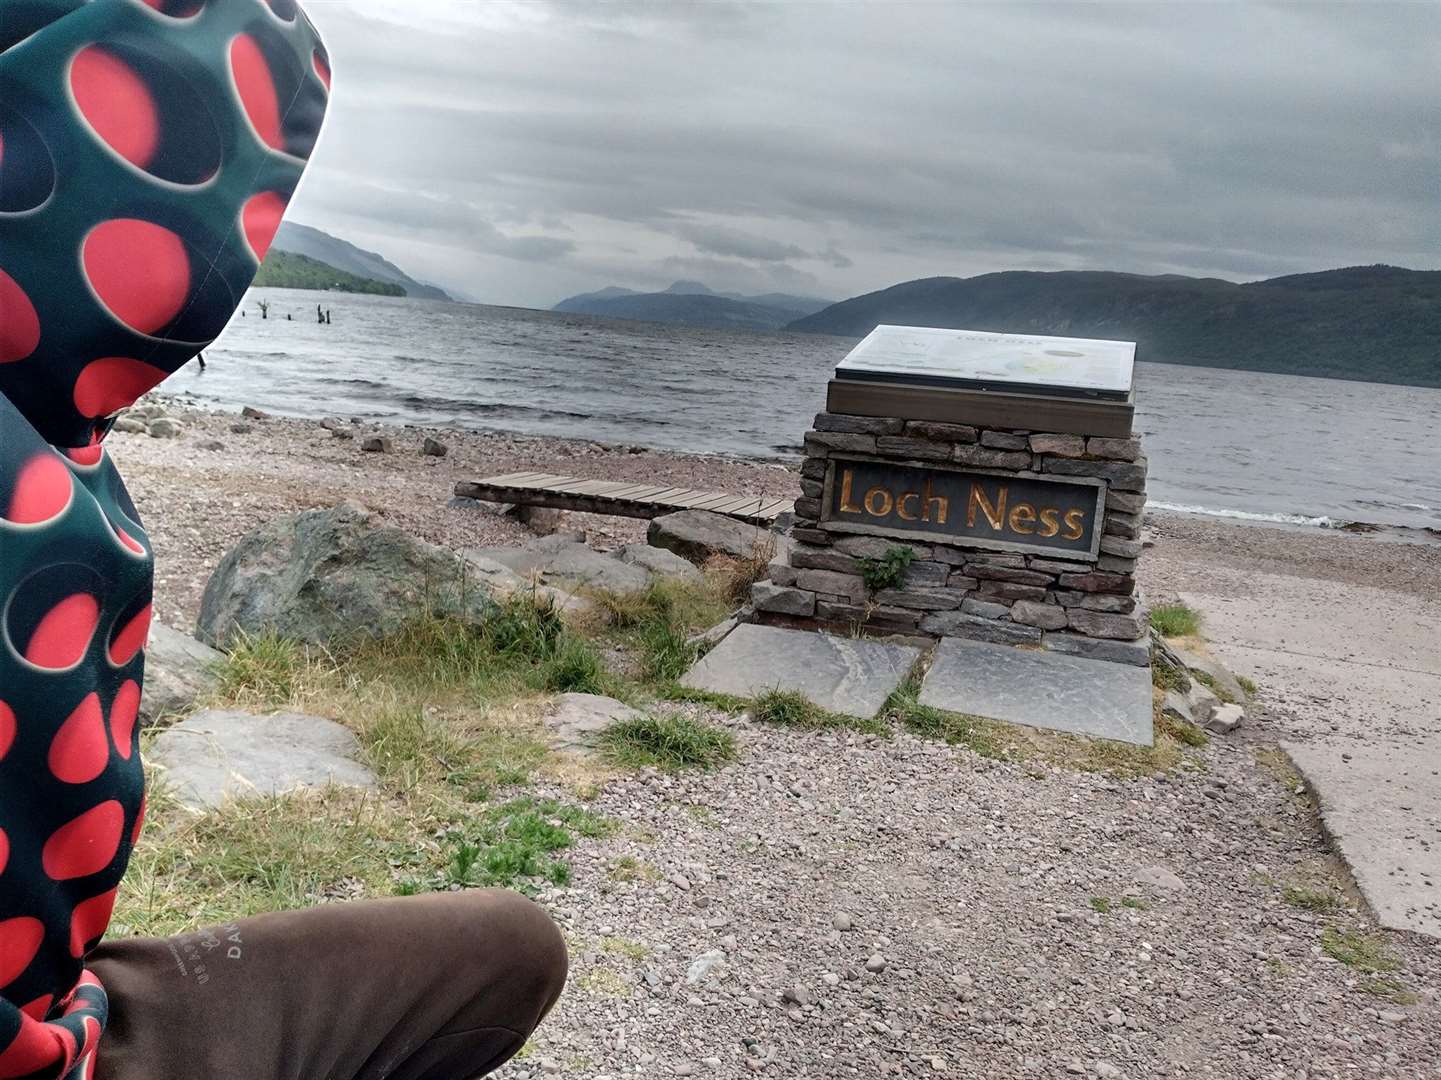 James at Loch Ness